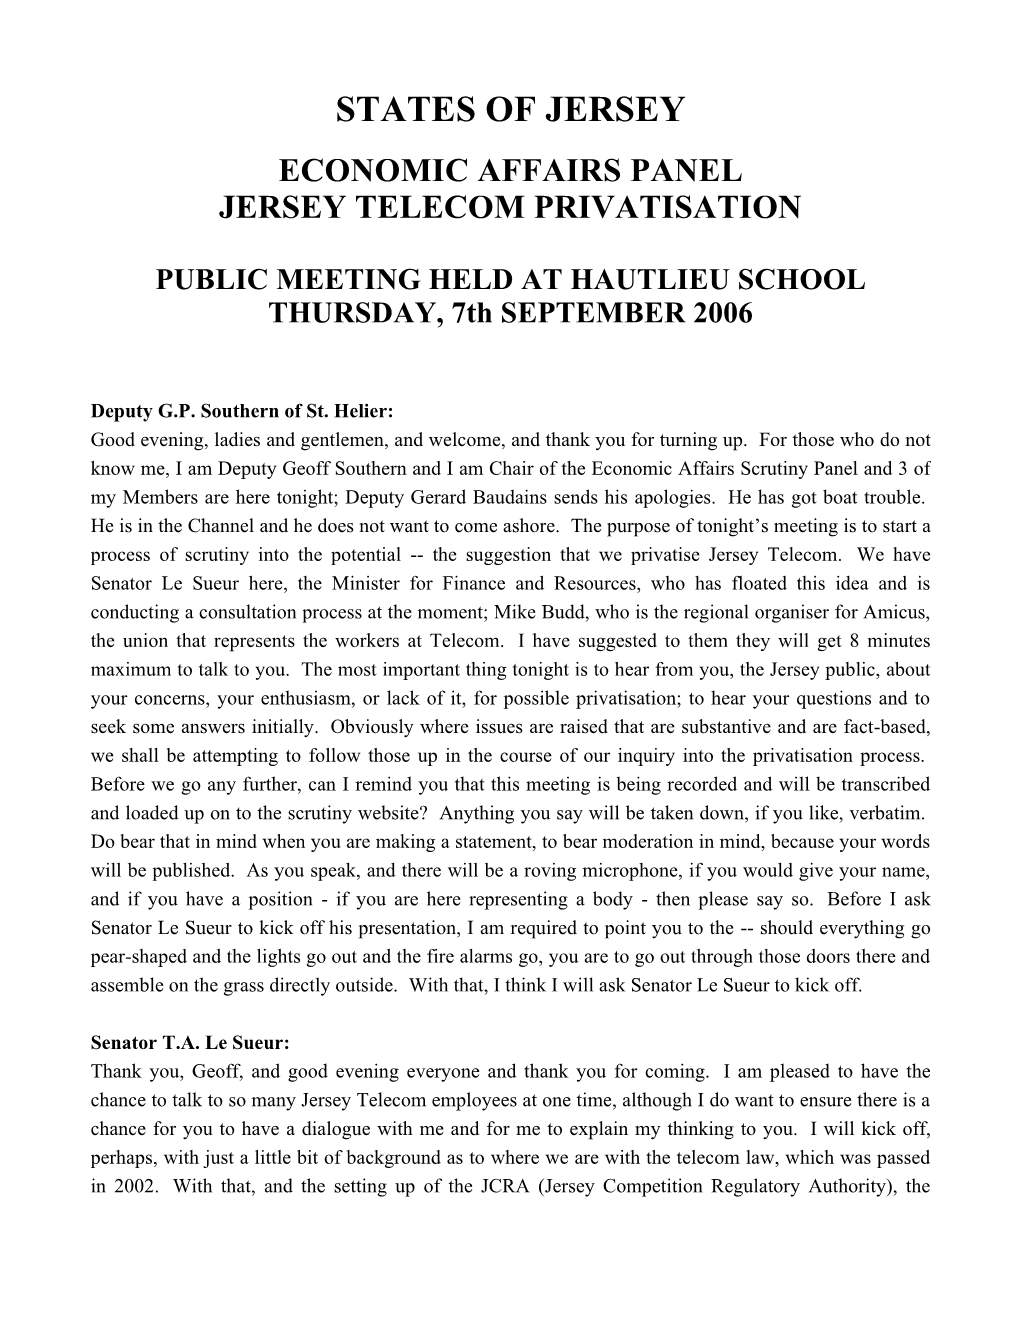 Economic Affairs Panel Jersey Telecom Privatisation